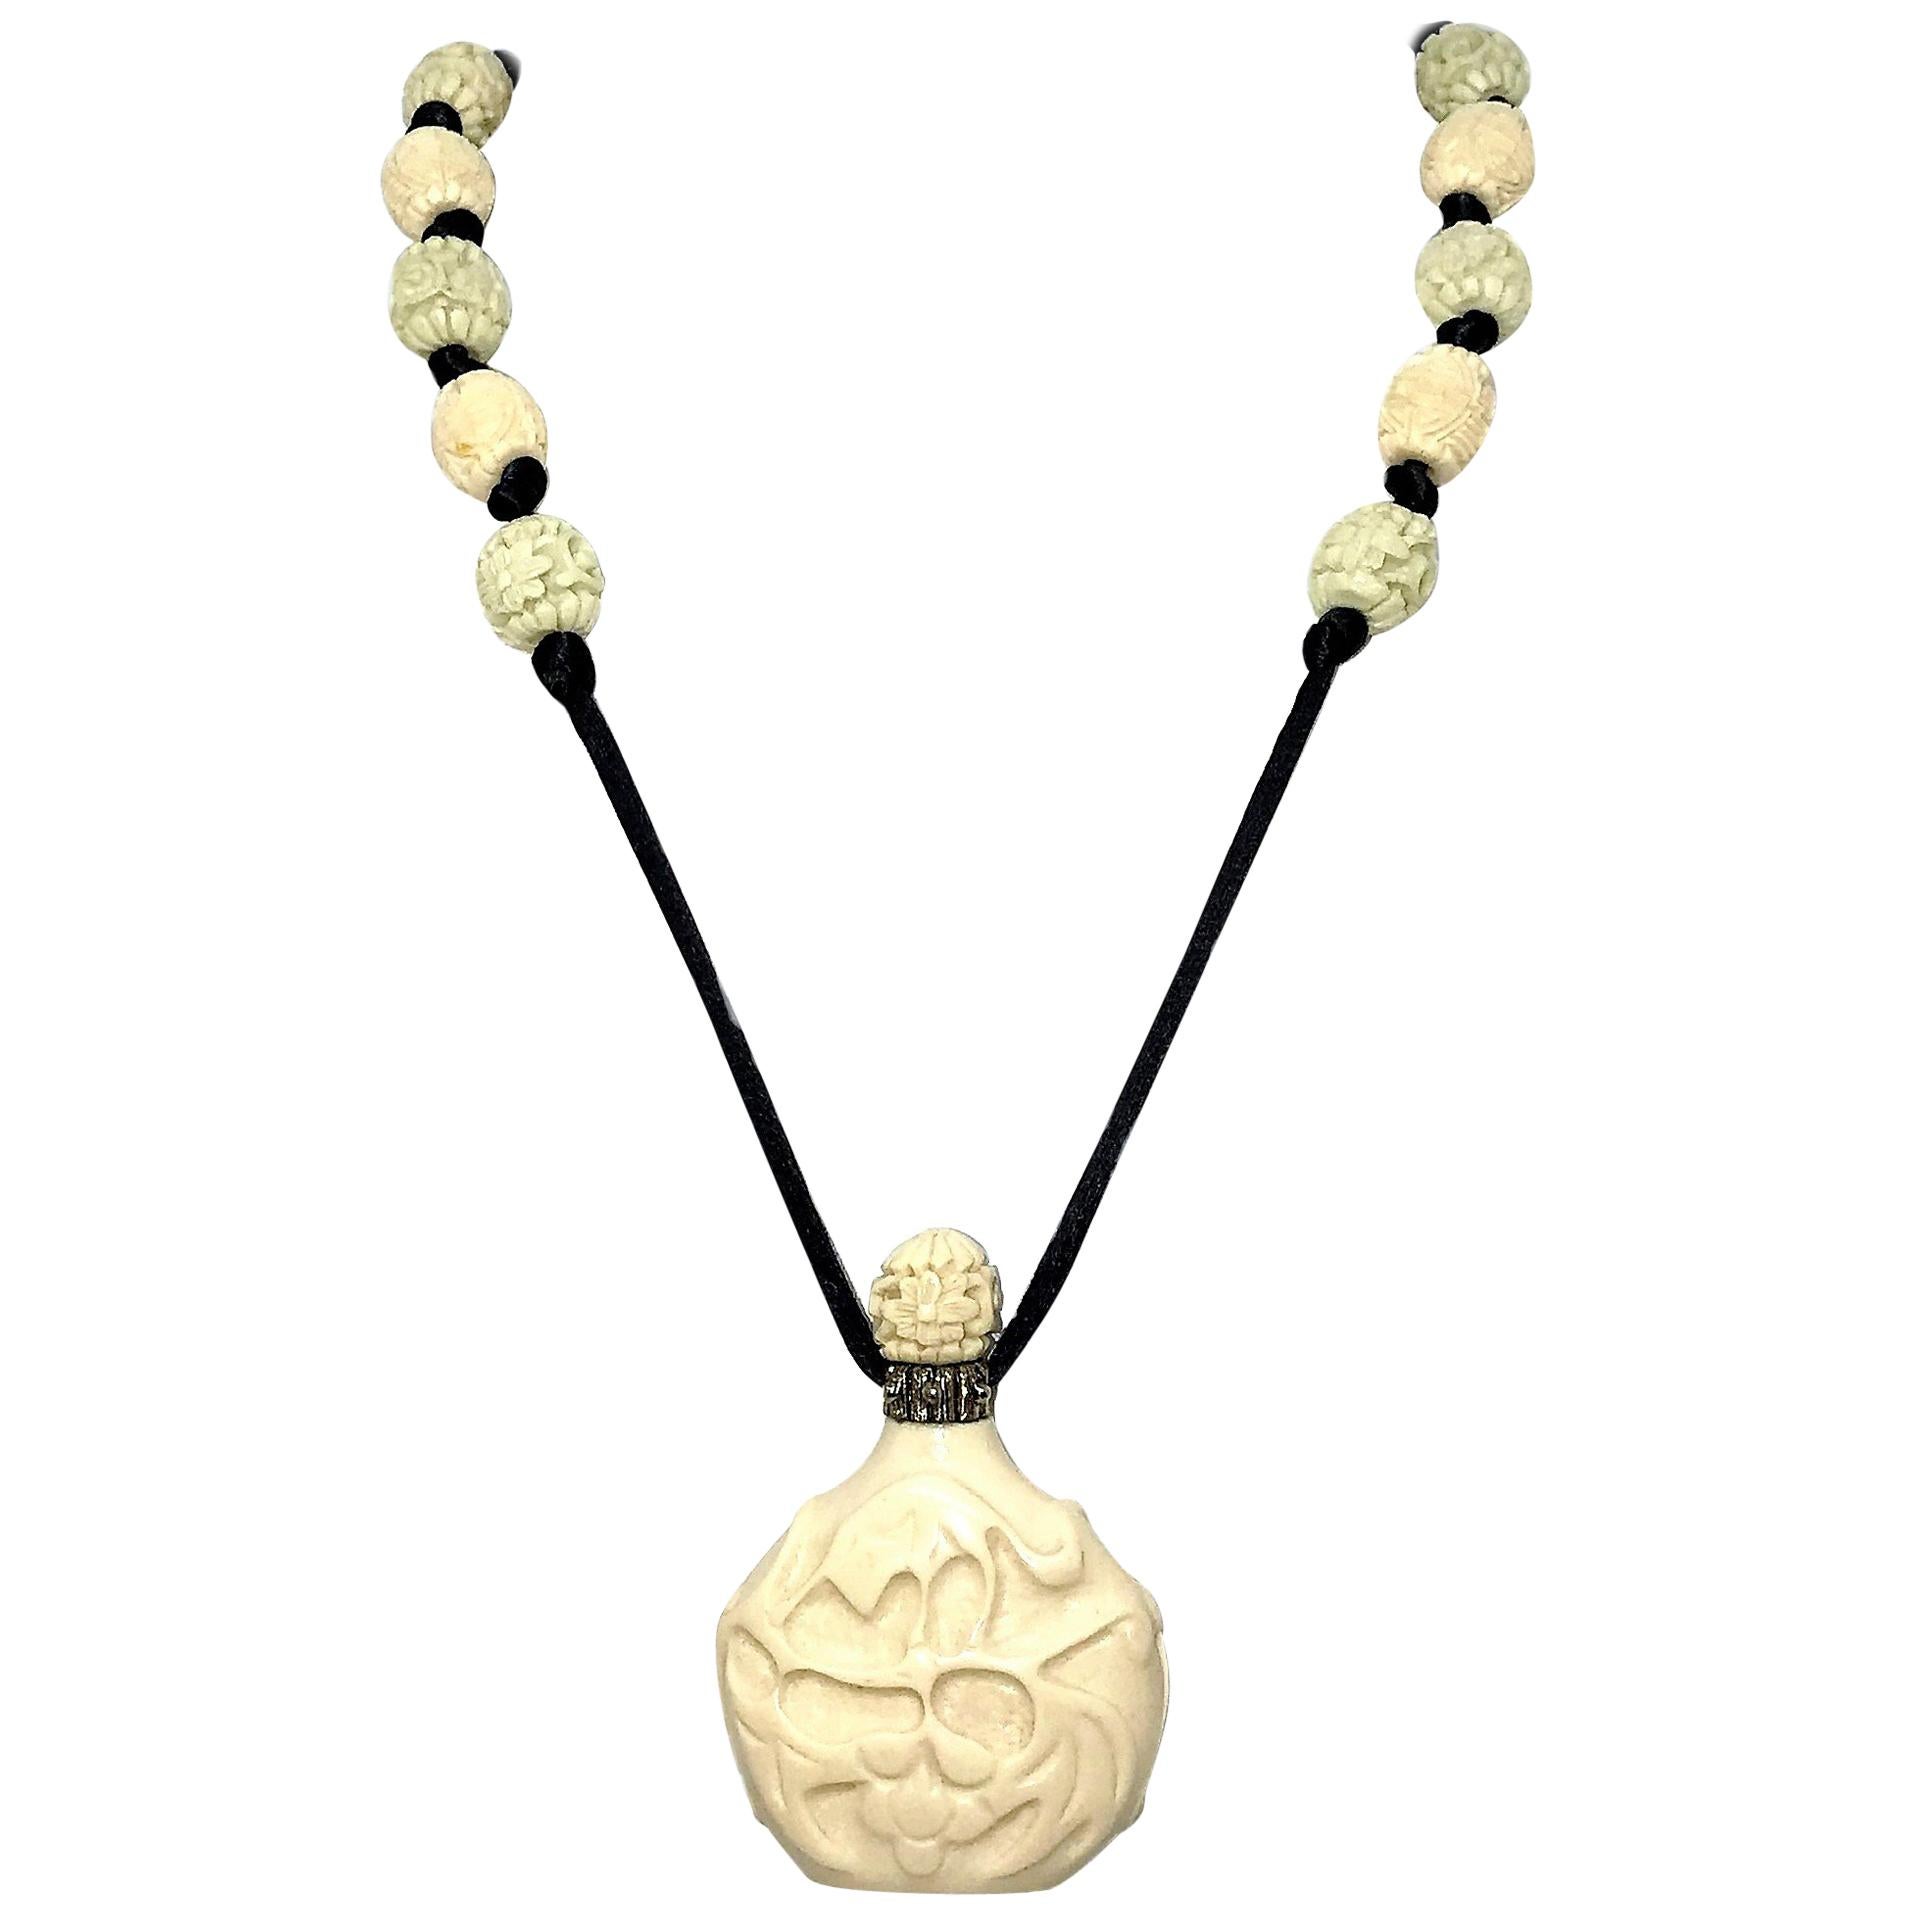 Circa 1960s Hattie Carnegie Asian Motif Pendant Necklace For Sale